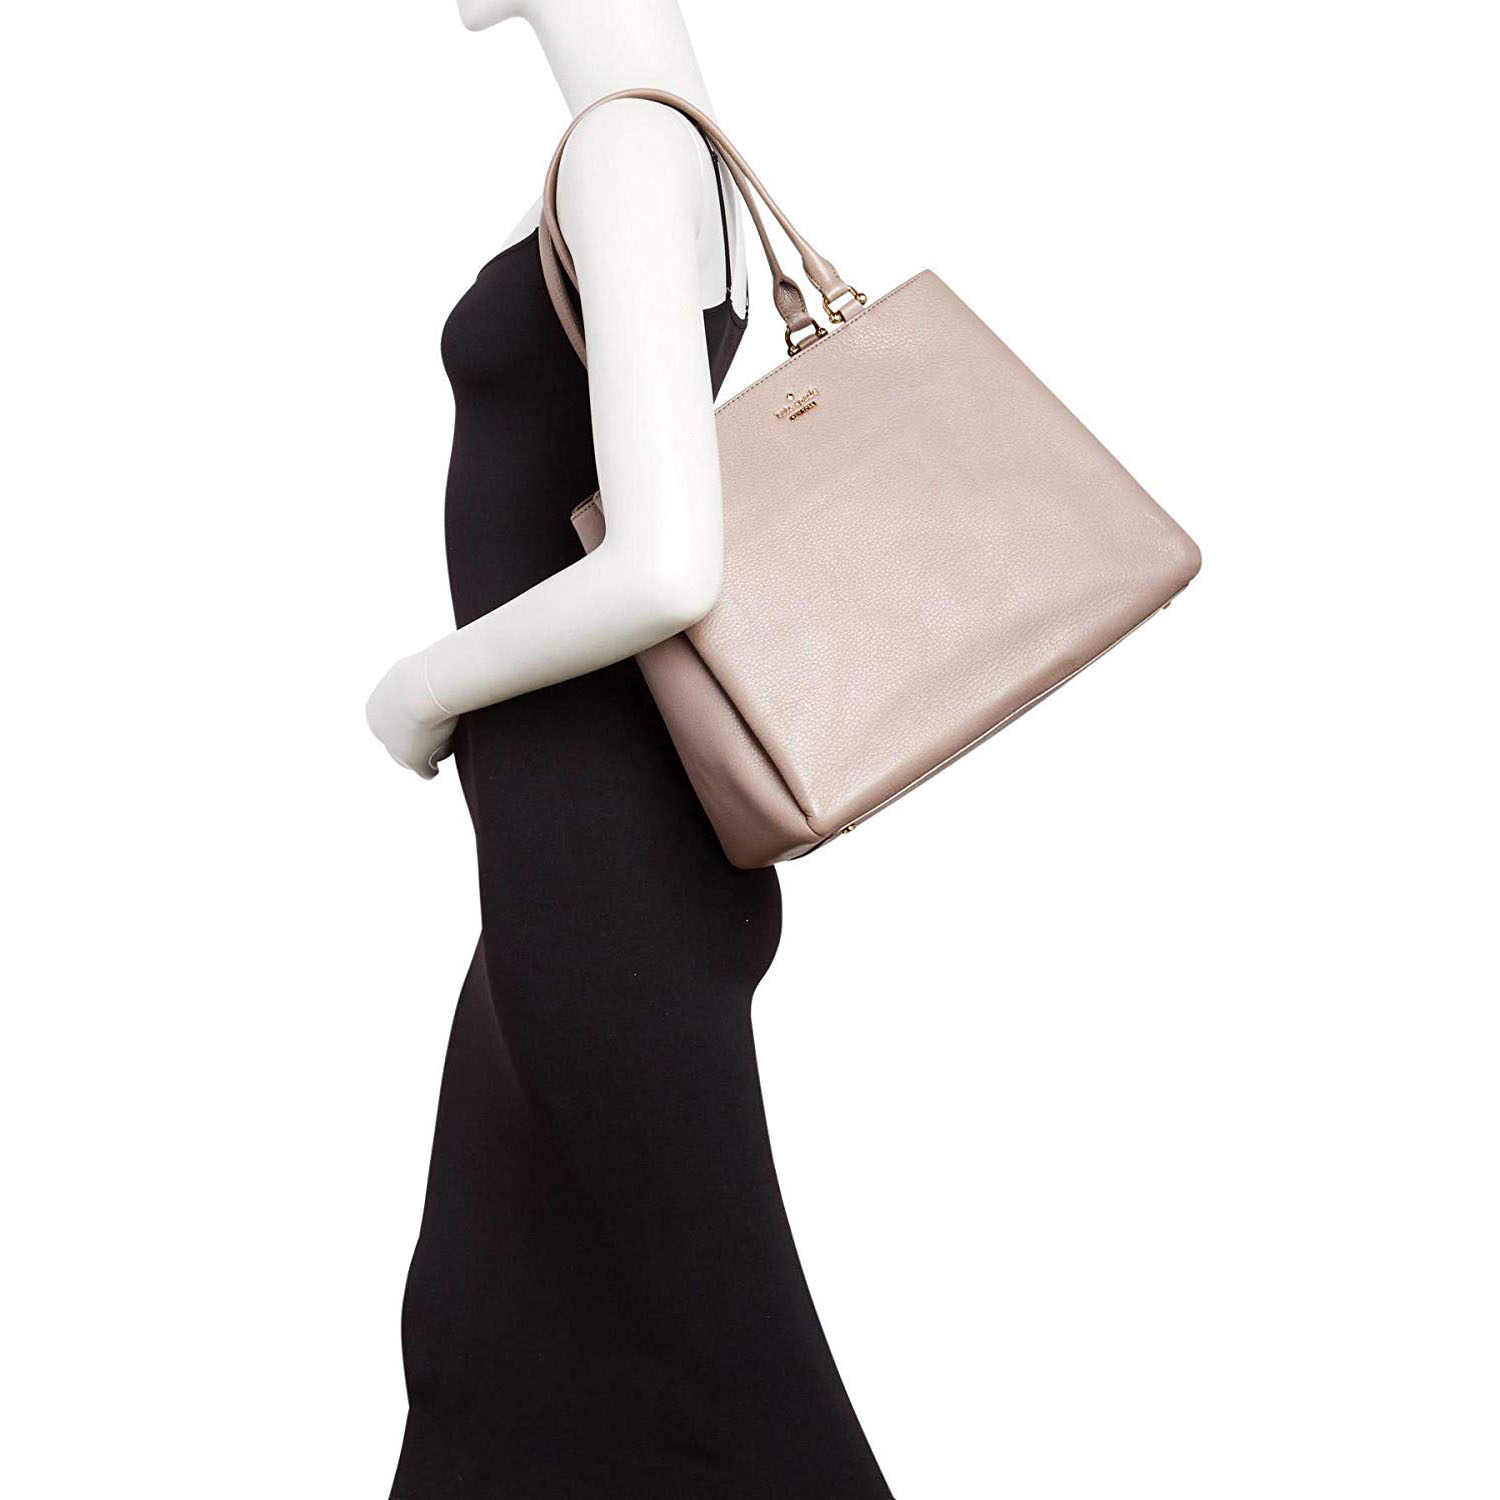 Kate Spade Shoulder Bag With Gift Bag Lombard Street Neve City Scape Grey # PXRU7613